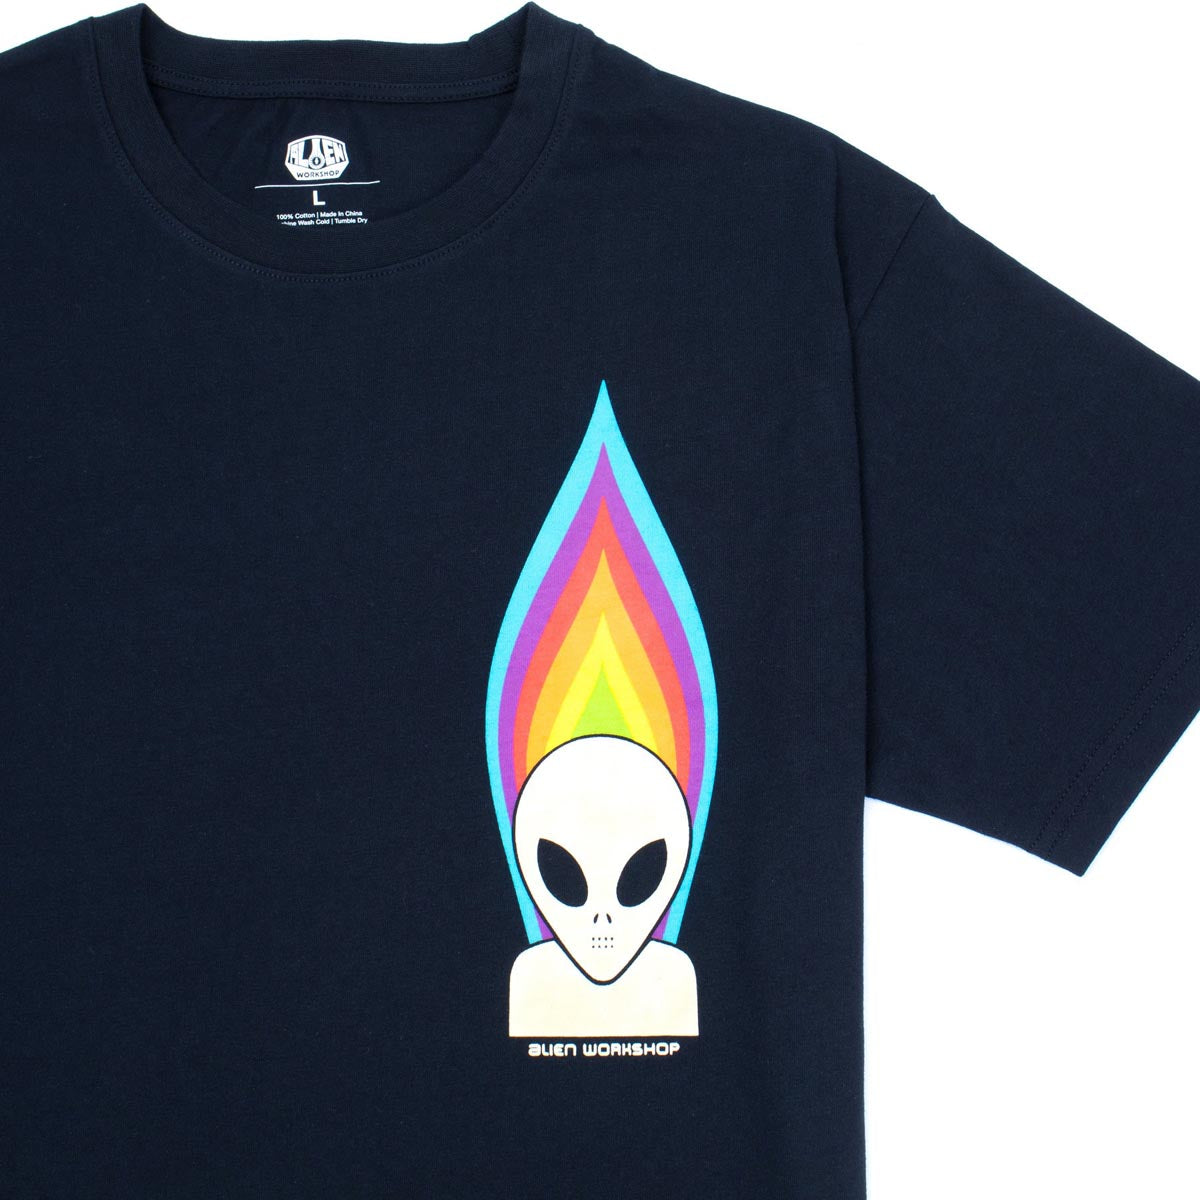 Alien Workshop Torch T-Shirt - Navy image 2